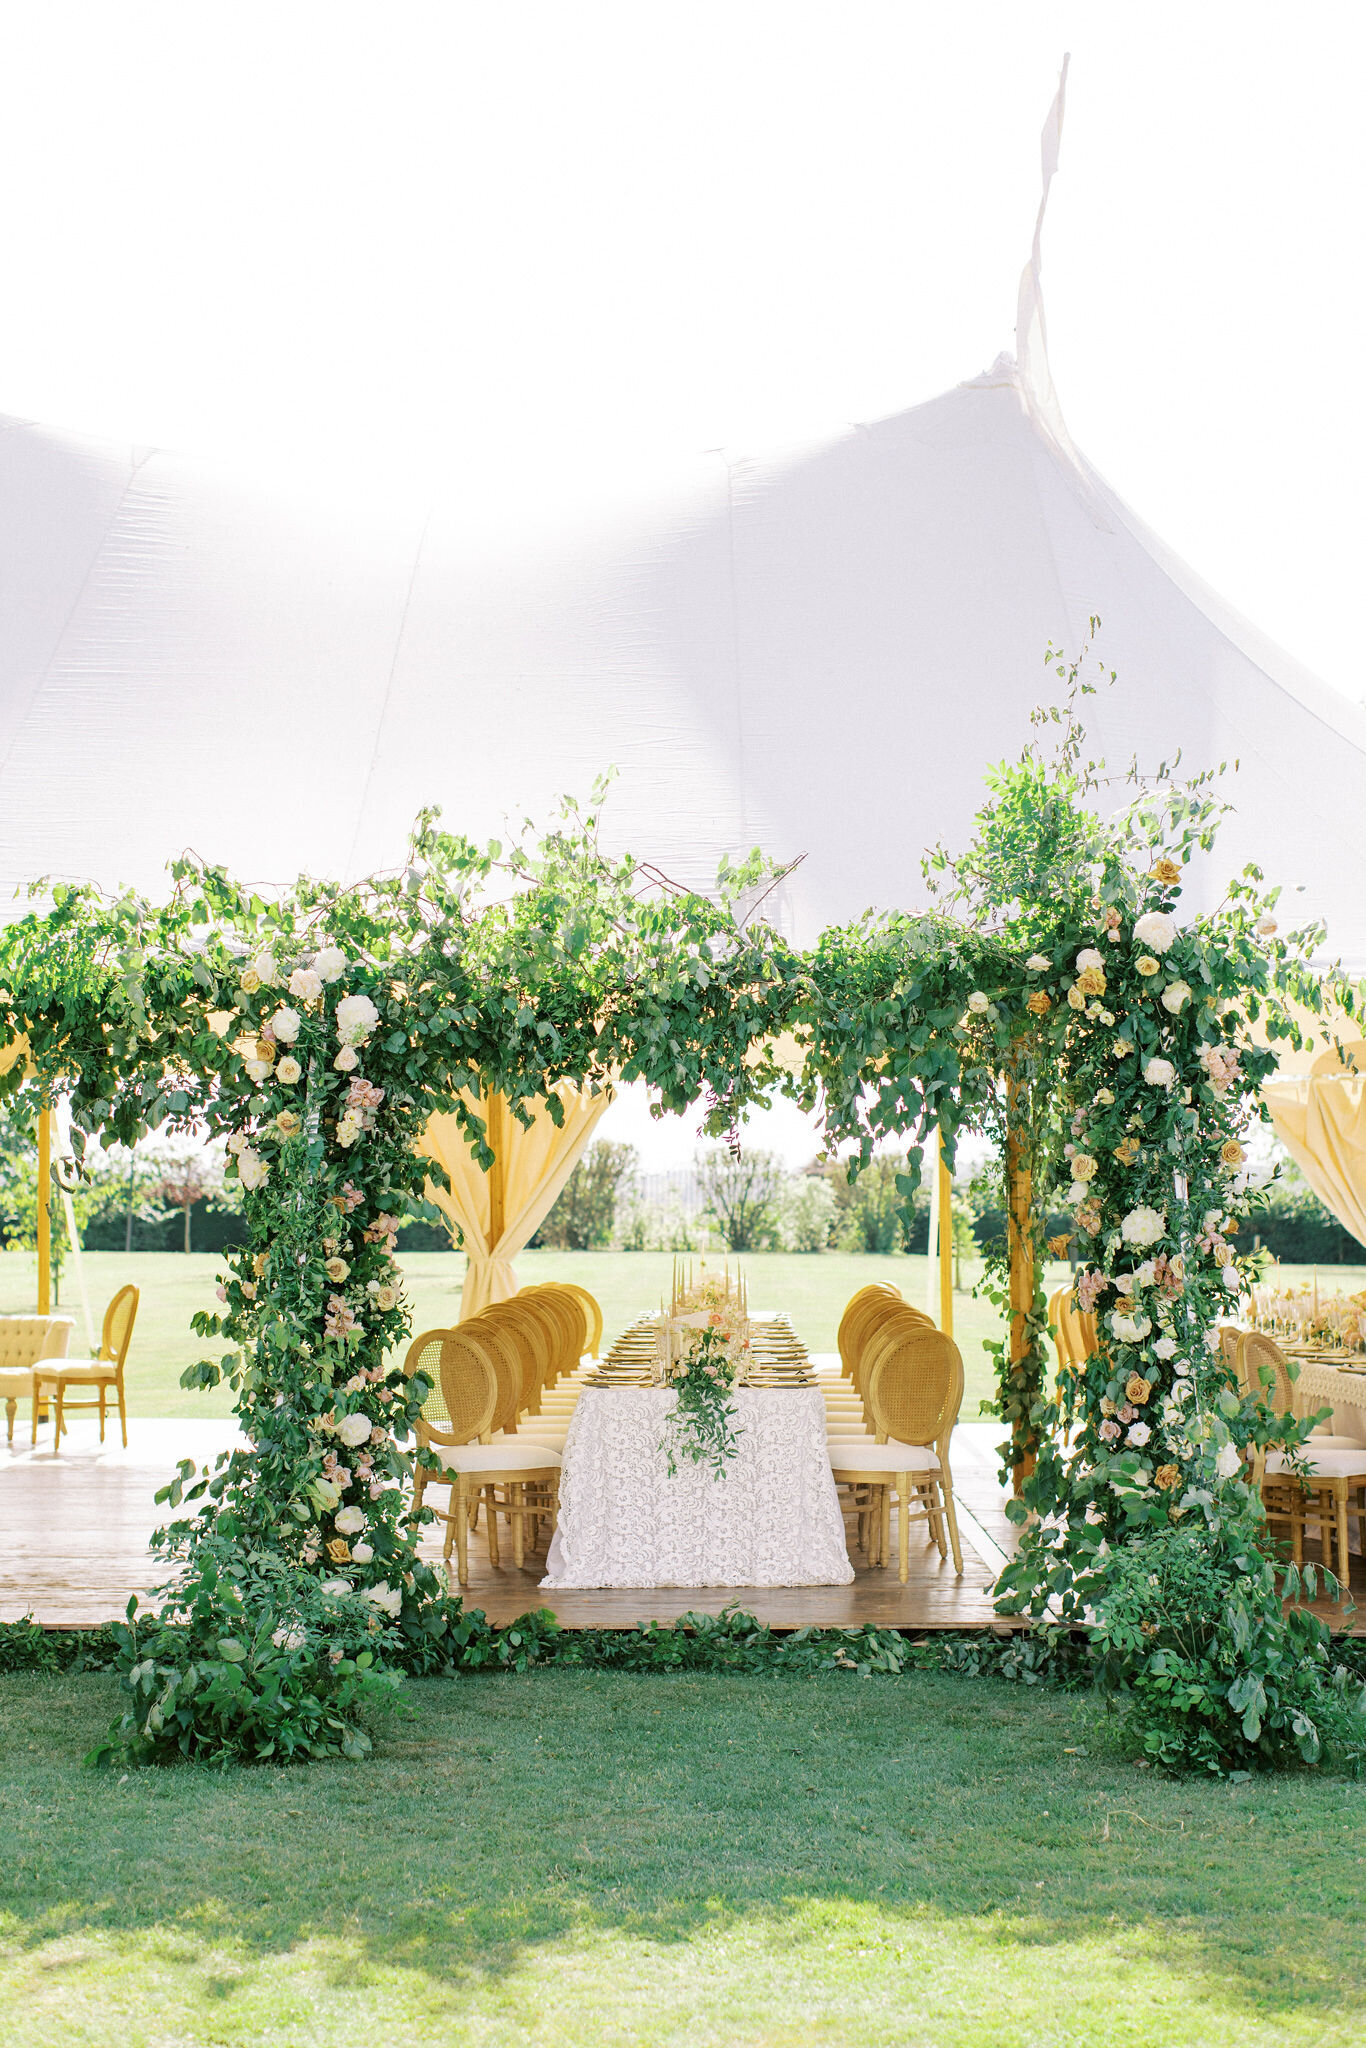 Wedding venue - tent wedding - france destination wedding florist